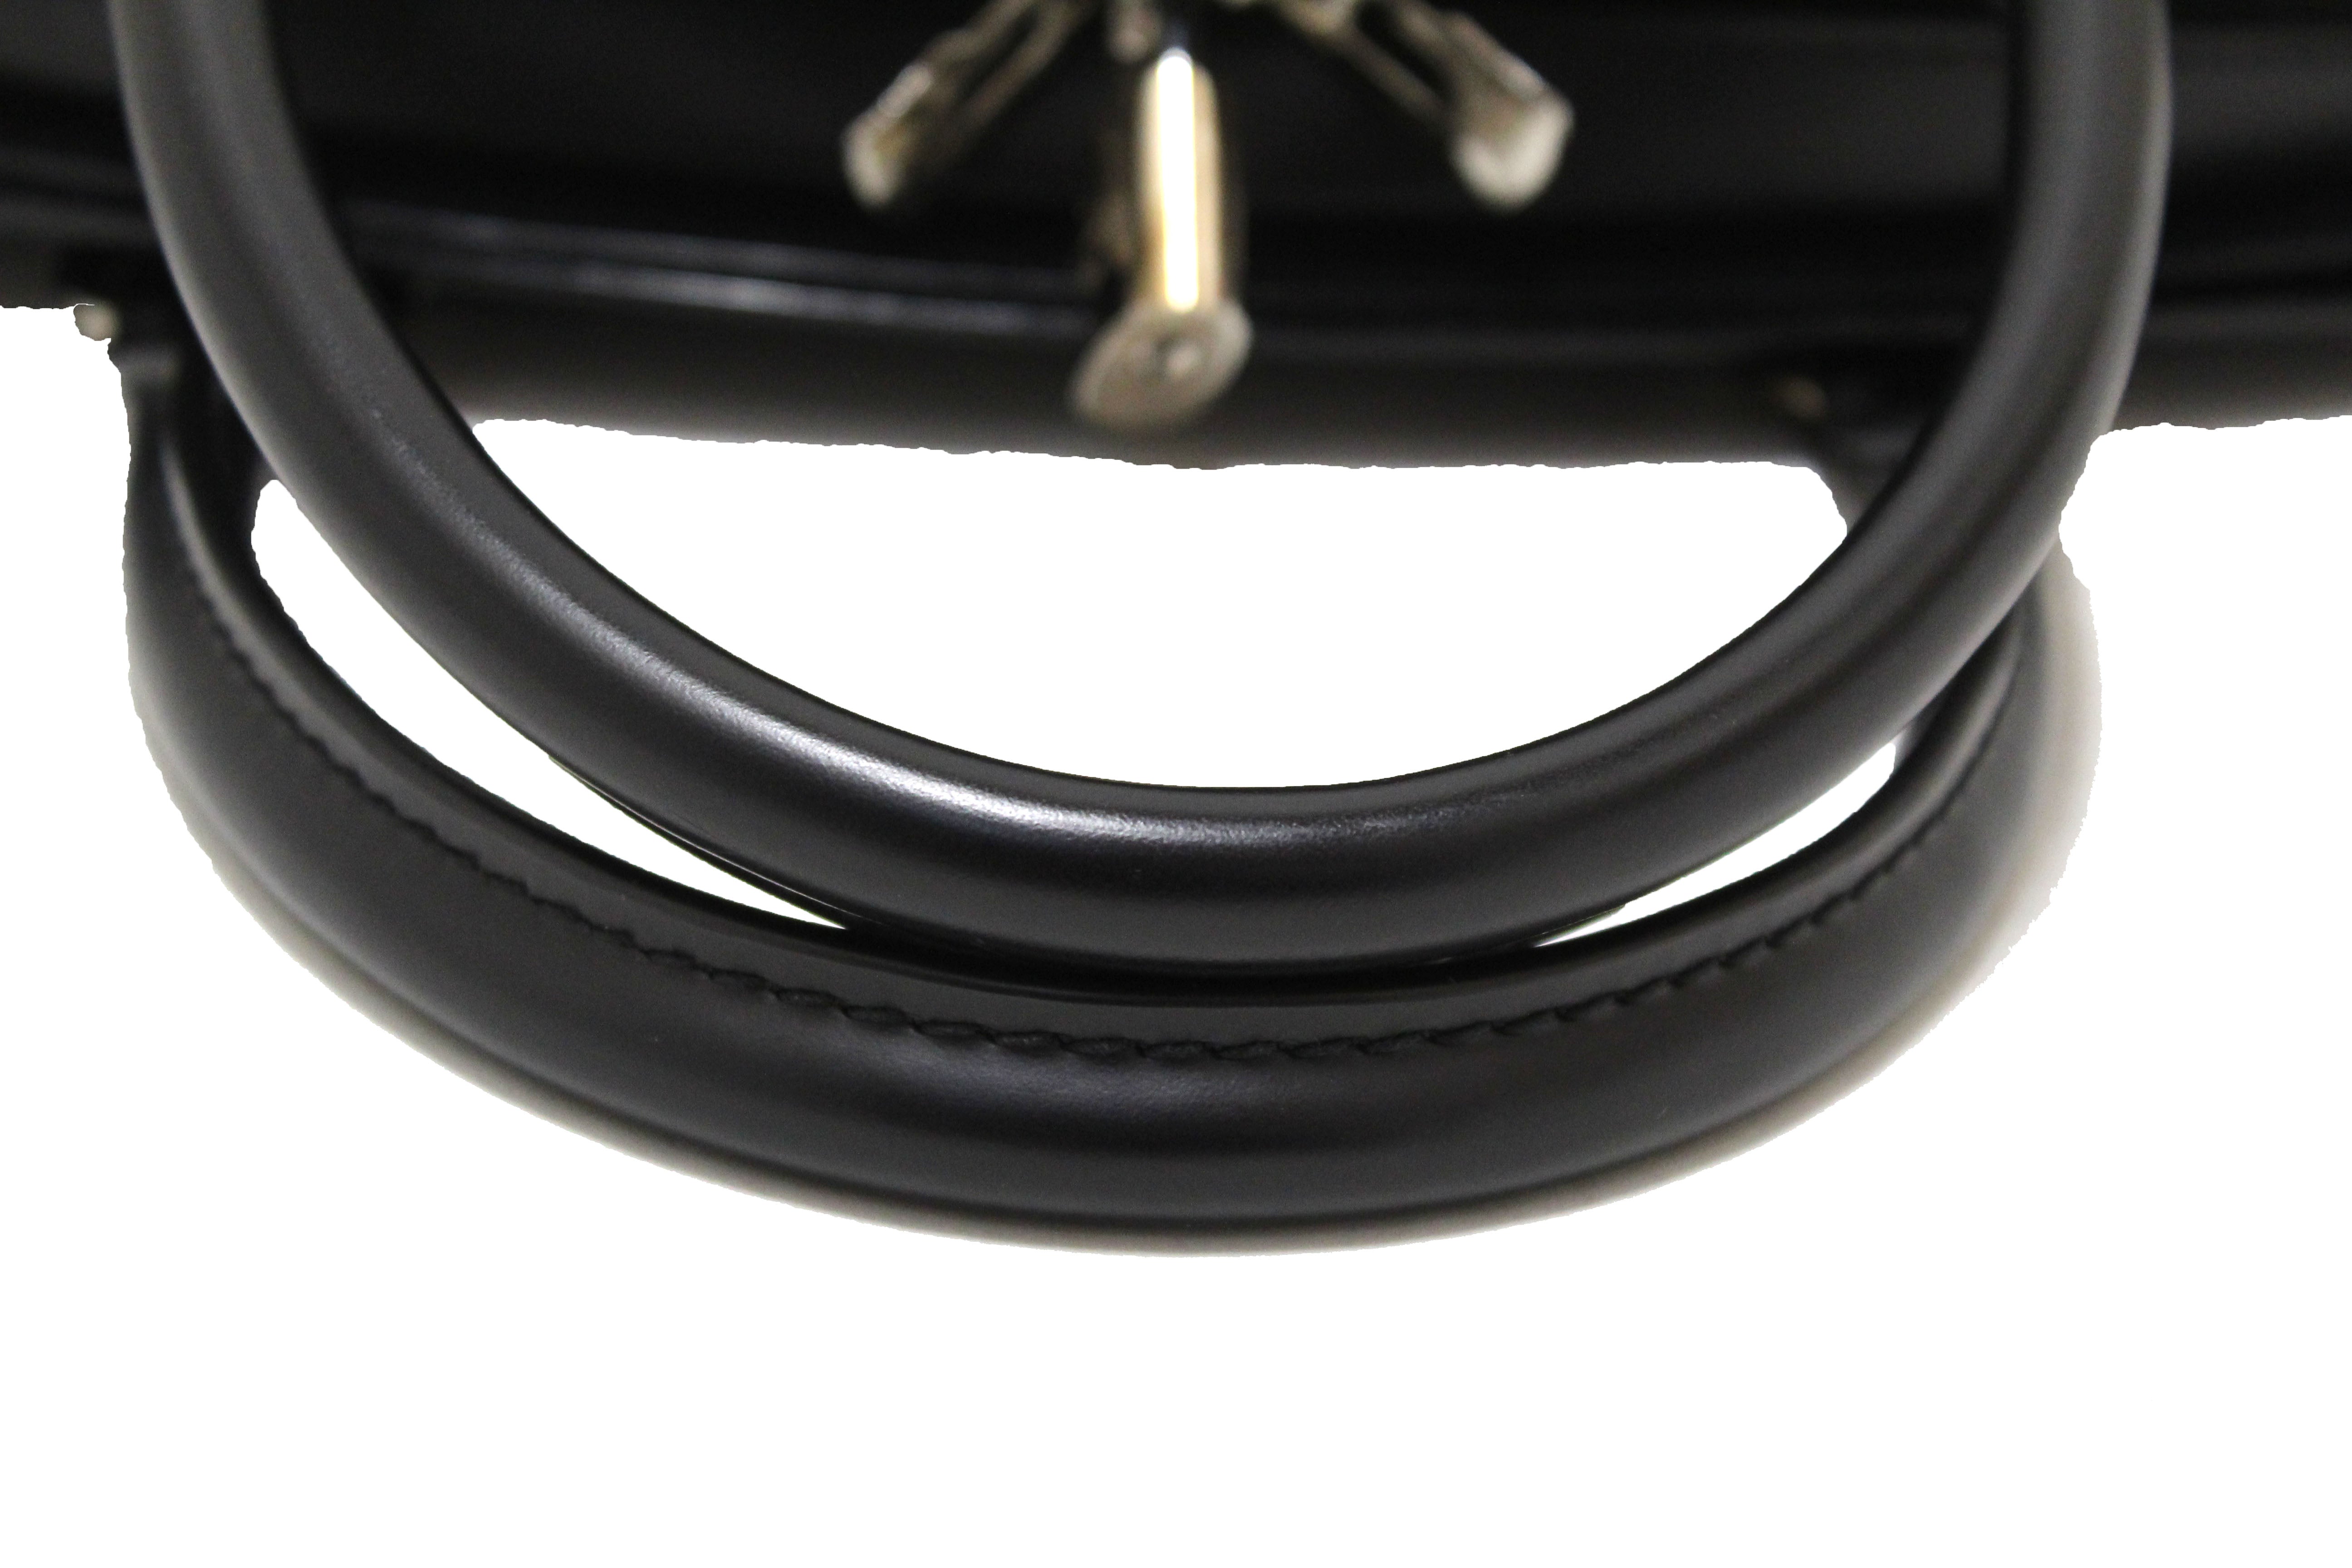 Authentic Louis Vuitton Black Epi Leather Pont-Neuf PM Handbag